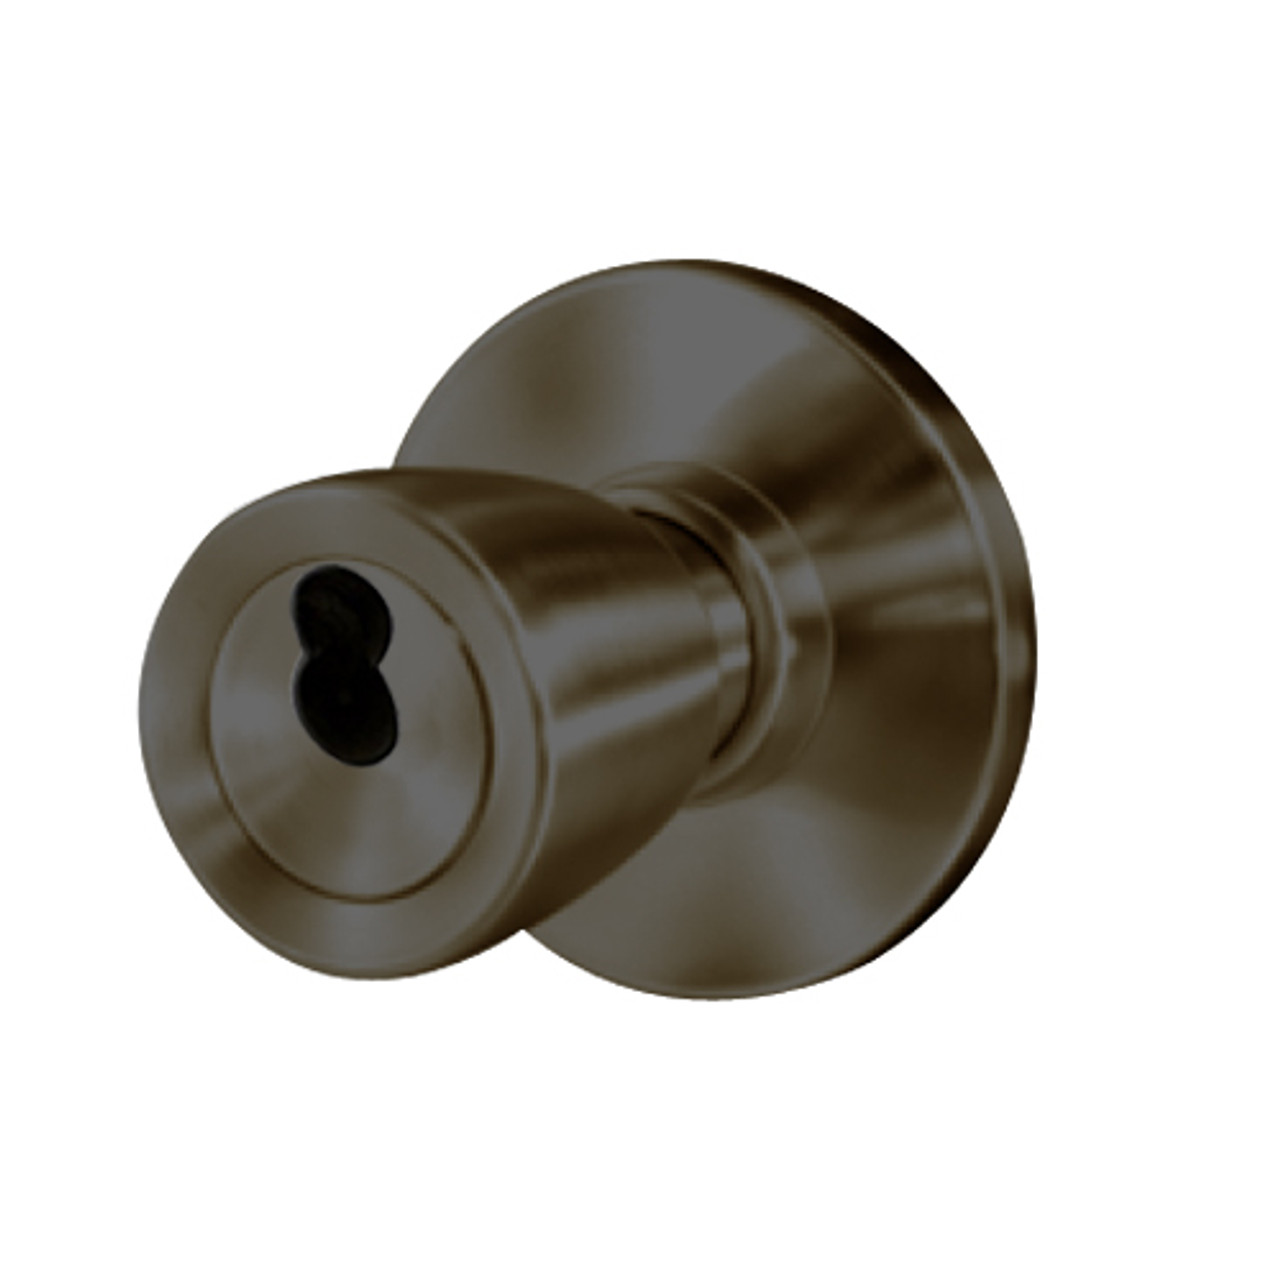 8K37D6ASTK613 Best 8K Series Storeroom Heavy Duty Cylindrical Knob Locks with Tulip Style in Oil Rubbed Bronze